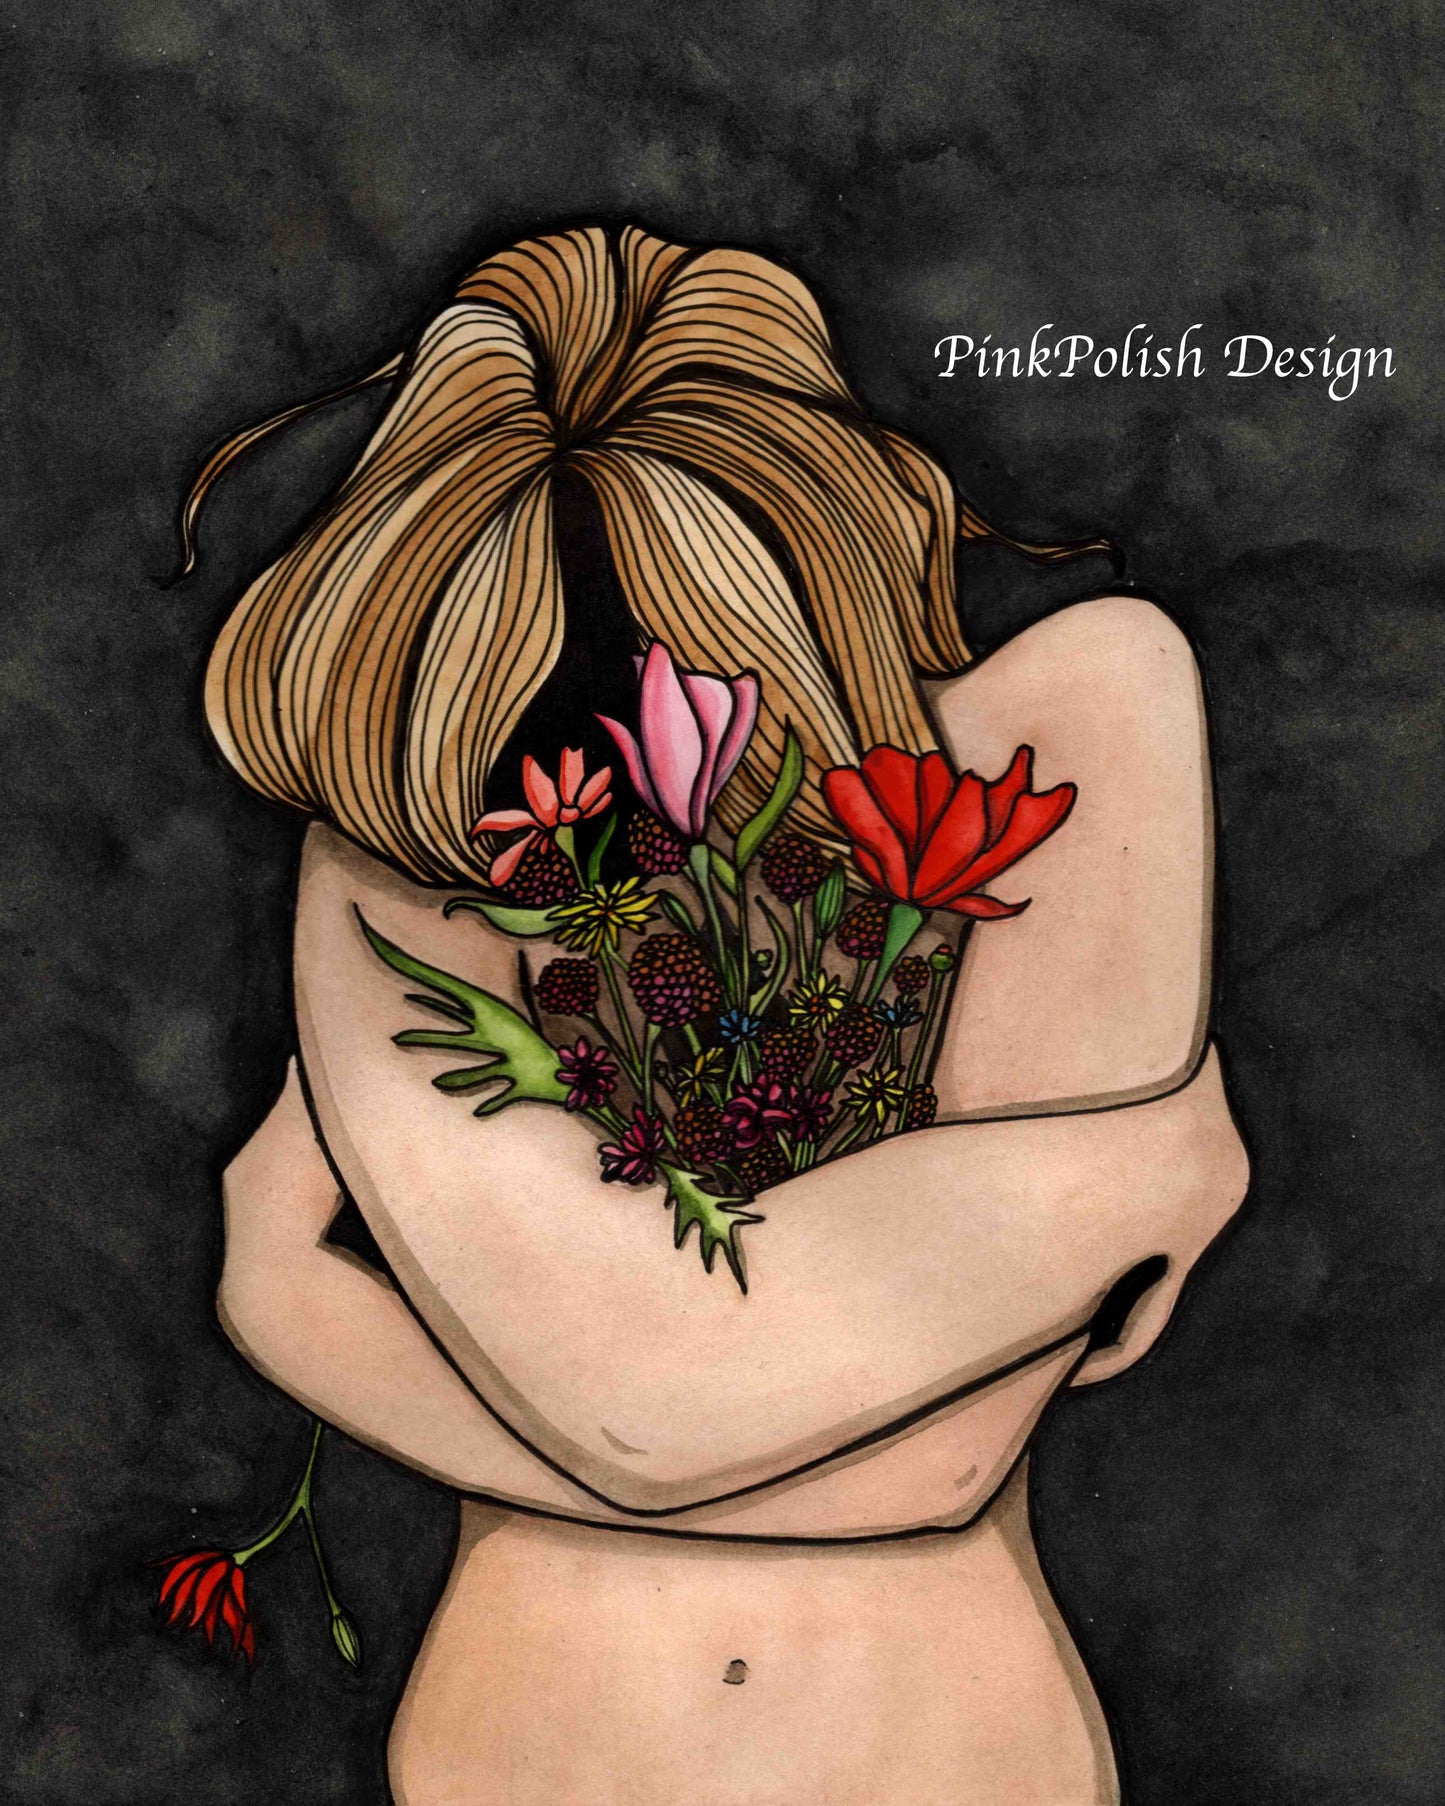 PinkPolish Design Original Art "In Darkness Bloom" Original Watercolor & Ink Illustration